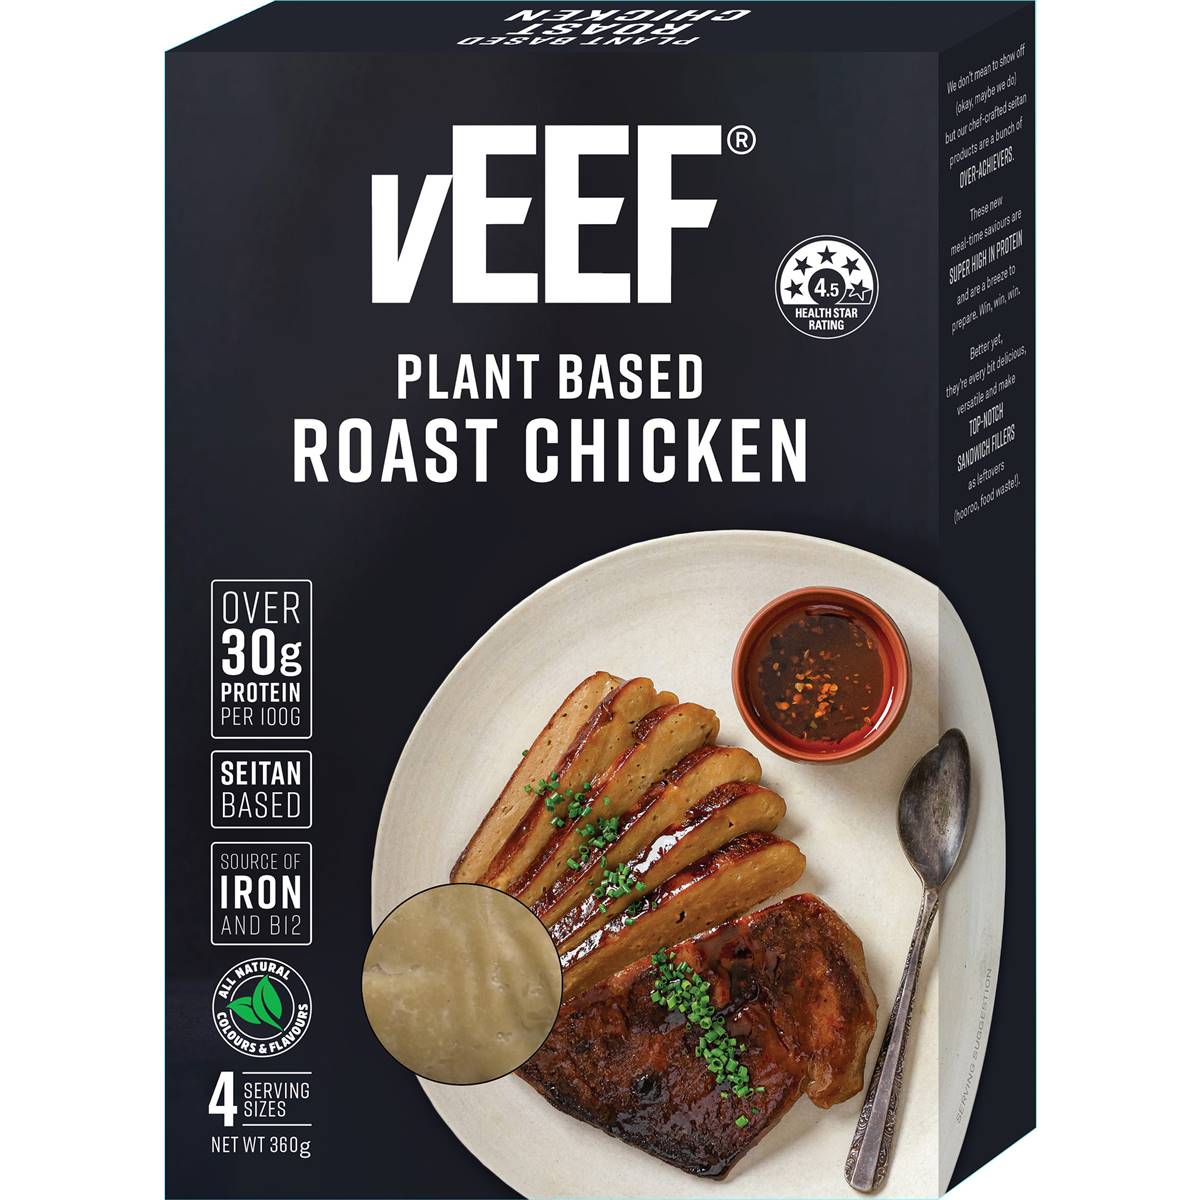 Calories in Veef Plant Based Roast Chicken